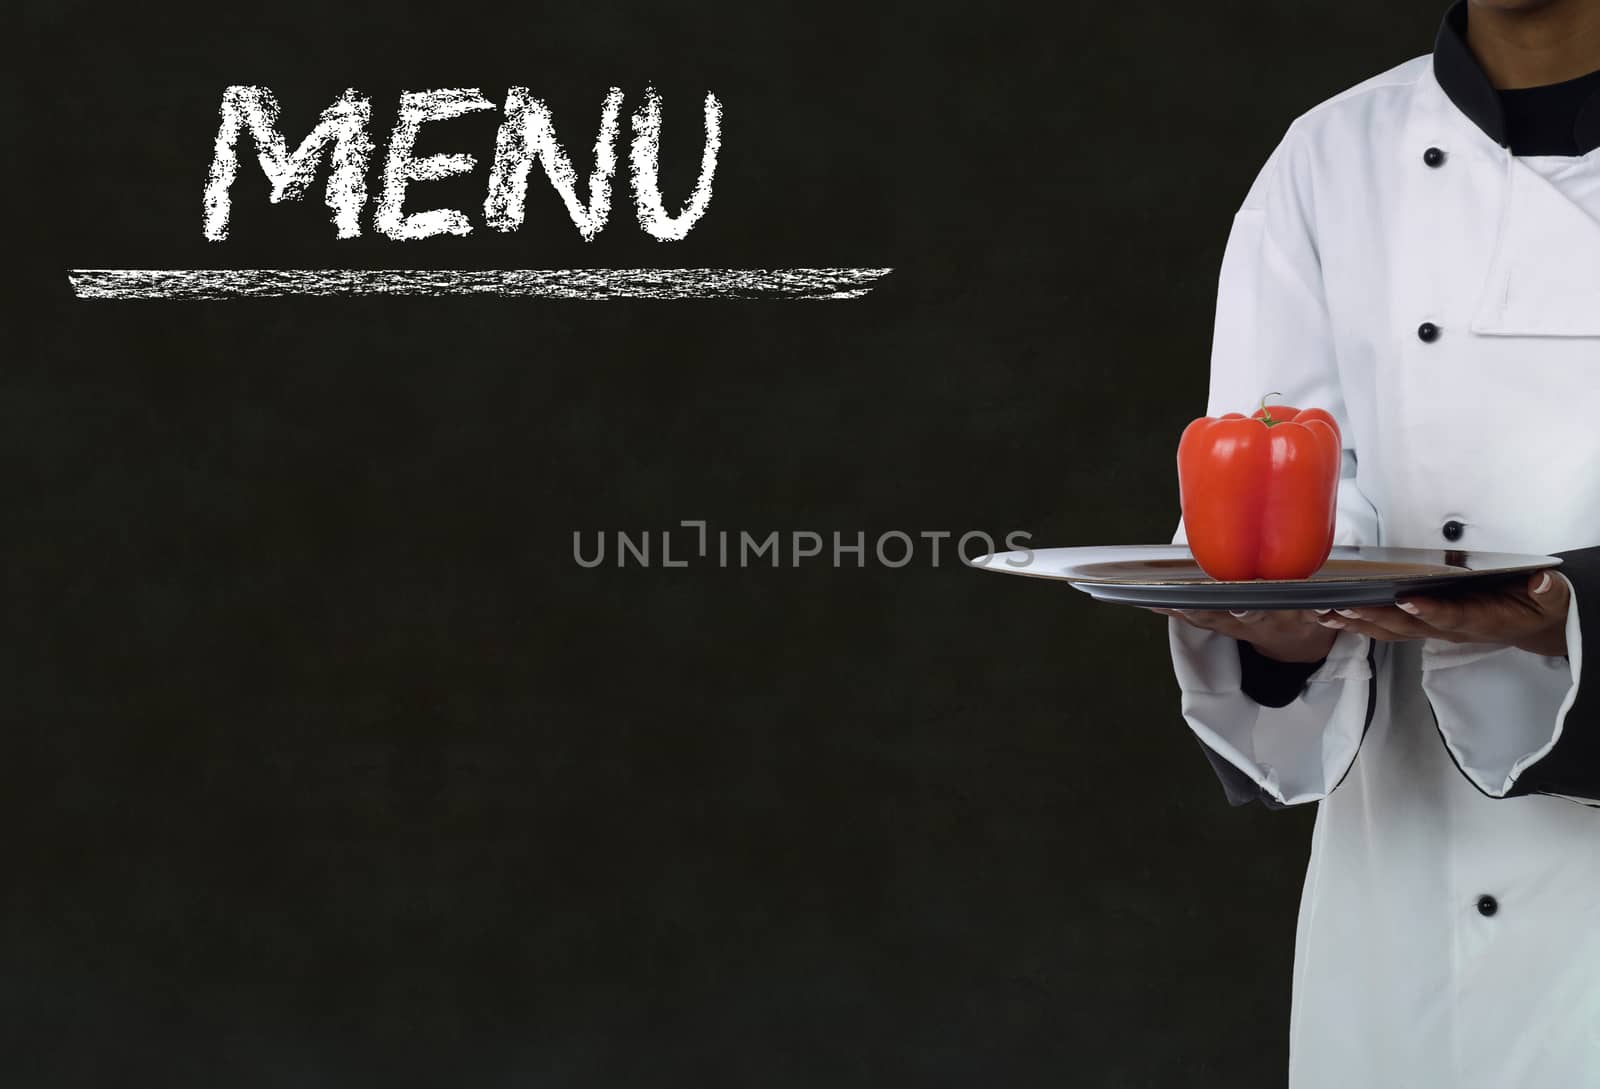 Chef with chalk menu sign written on blackboard background